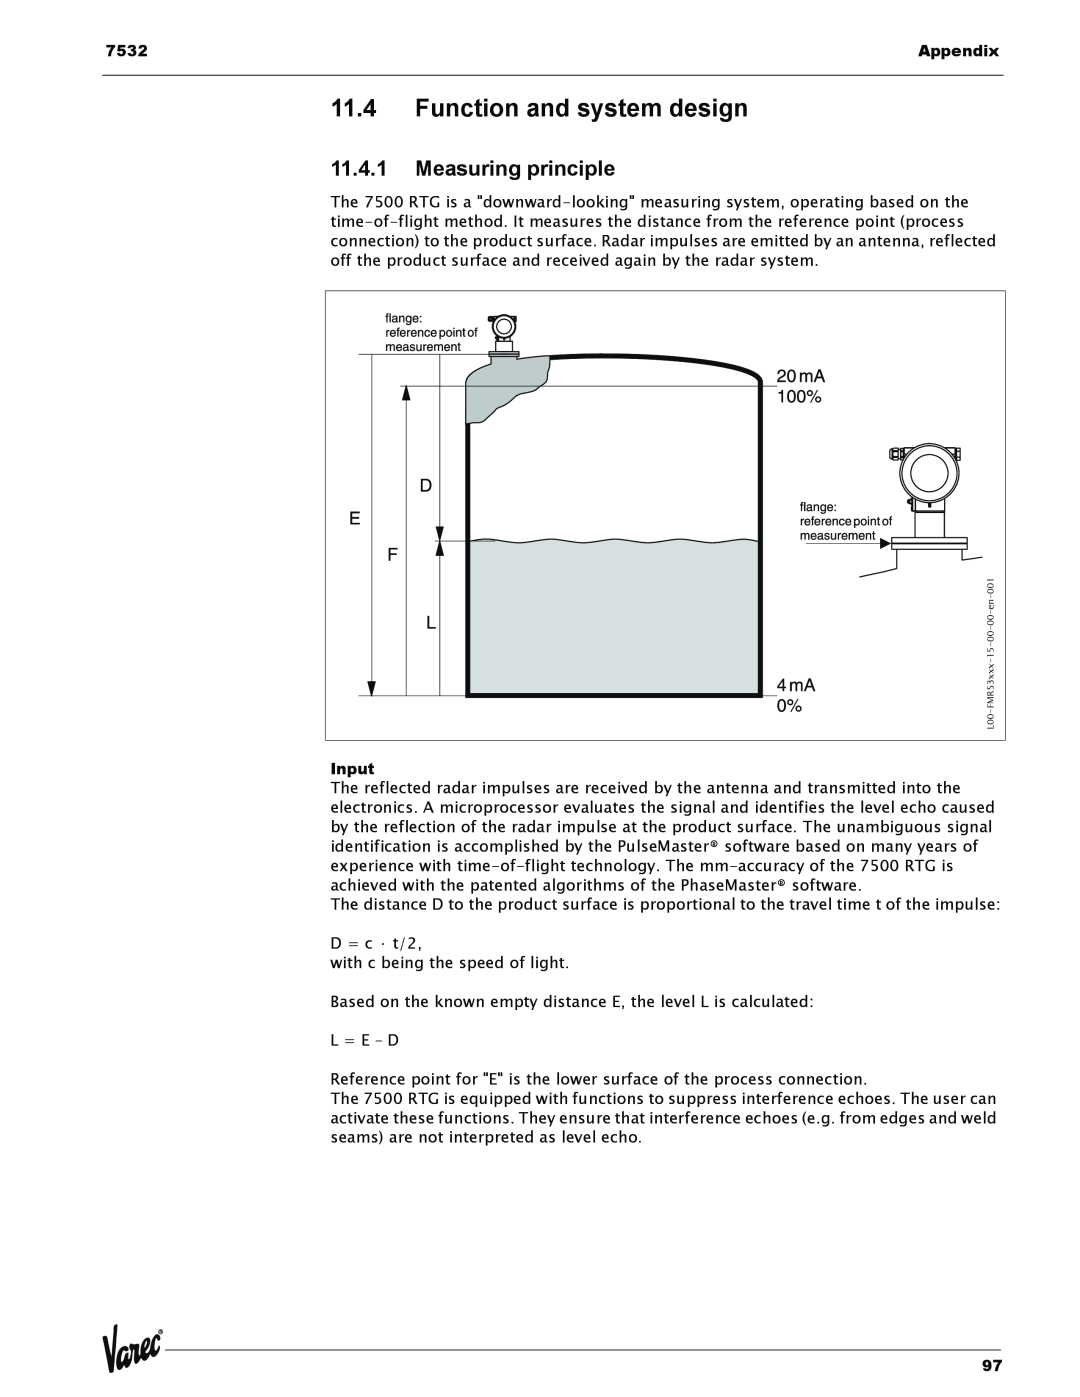 Lightning Audio 7532 manual 11.4Function and system design, 11.4.1Measuring principle, Appendix, Input 